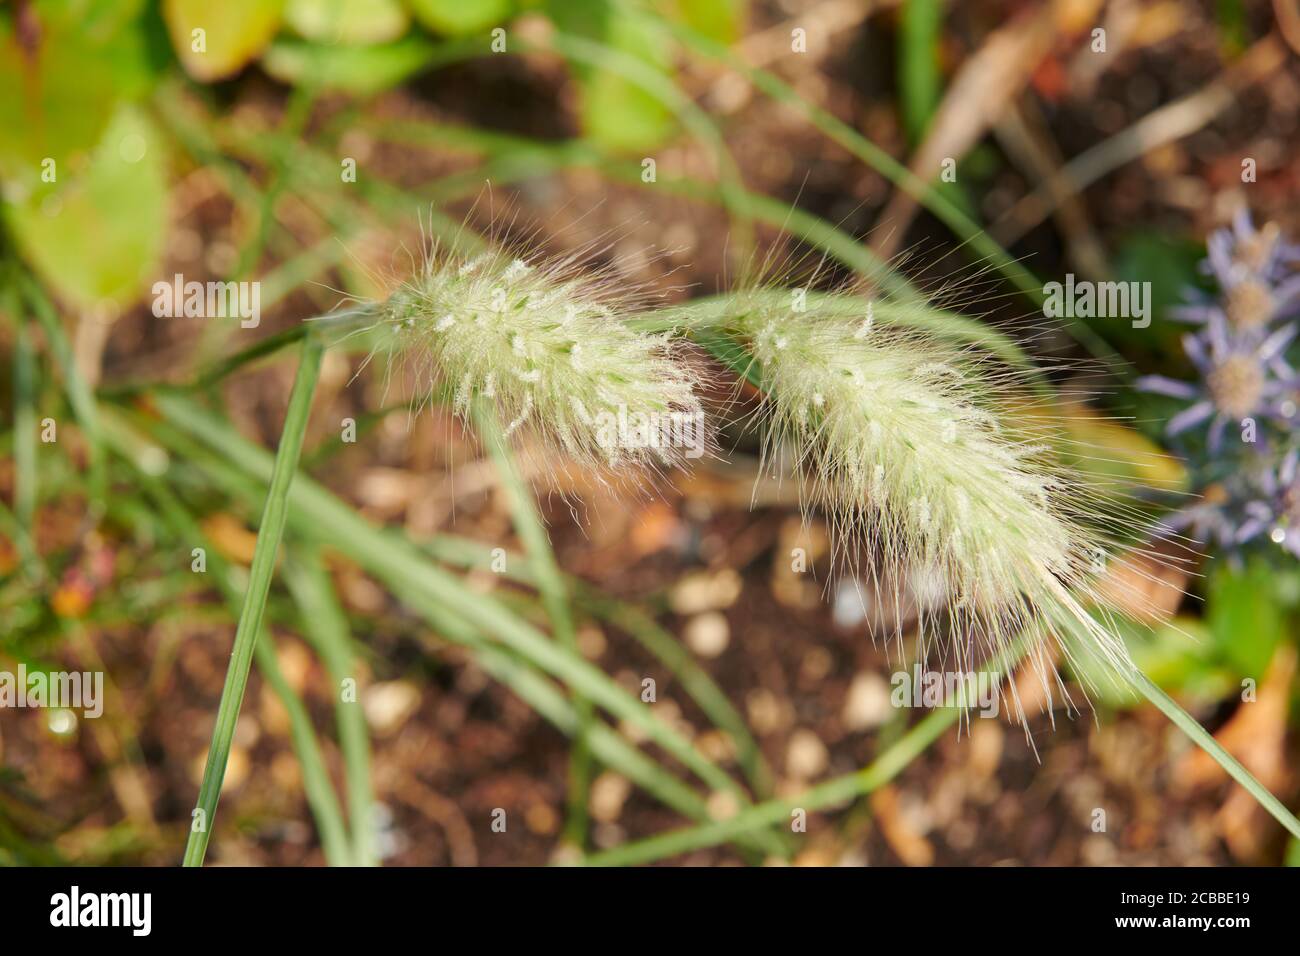 Feathertop or Long-style feather grass (Cenchrus longisetus) Stock Photo